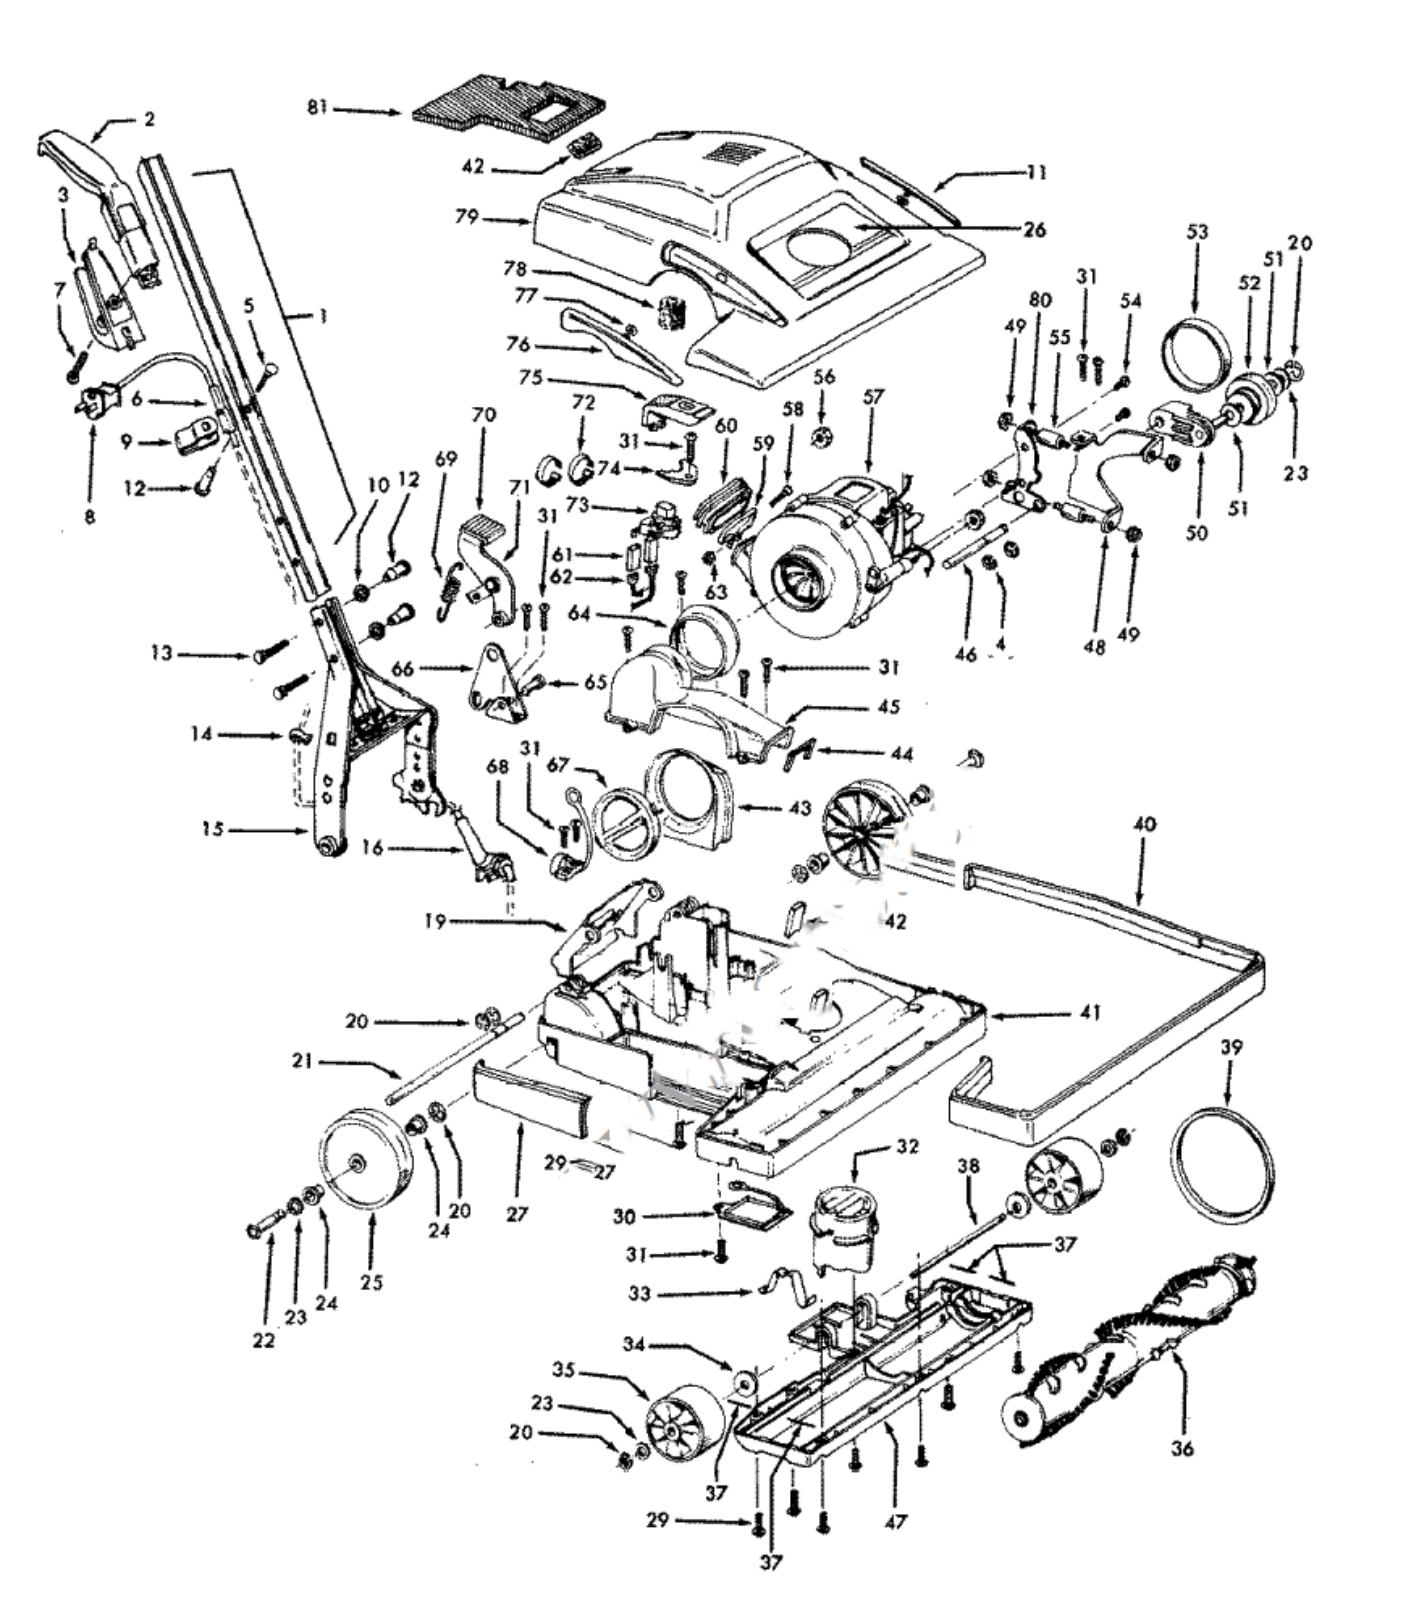 Hoover C1810 Owner's Manual